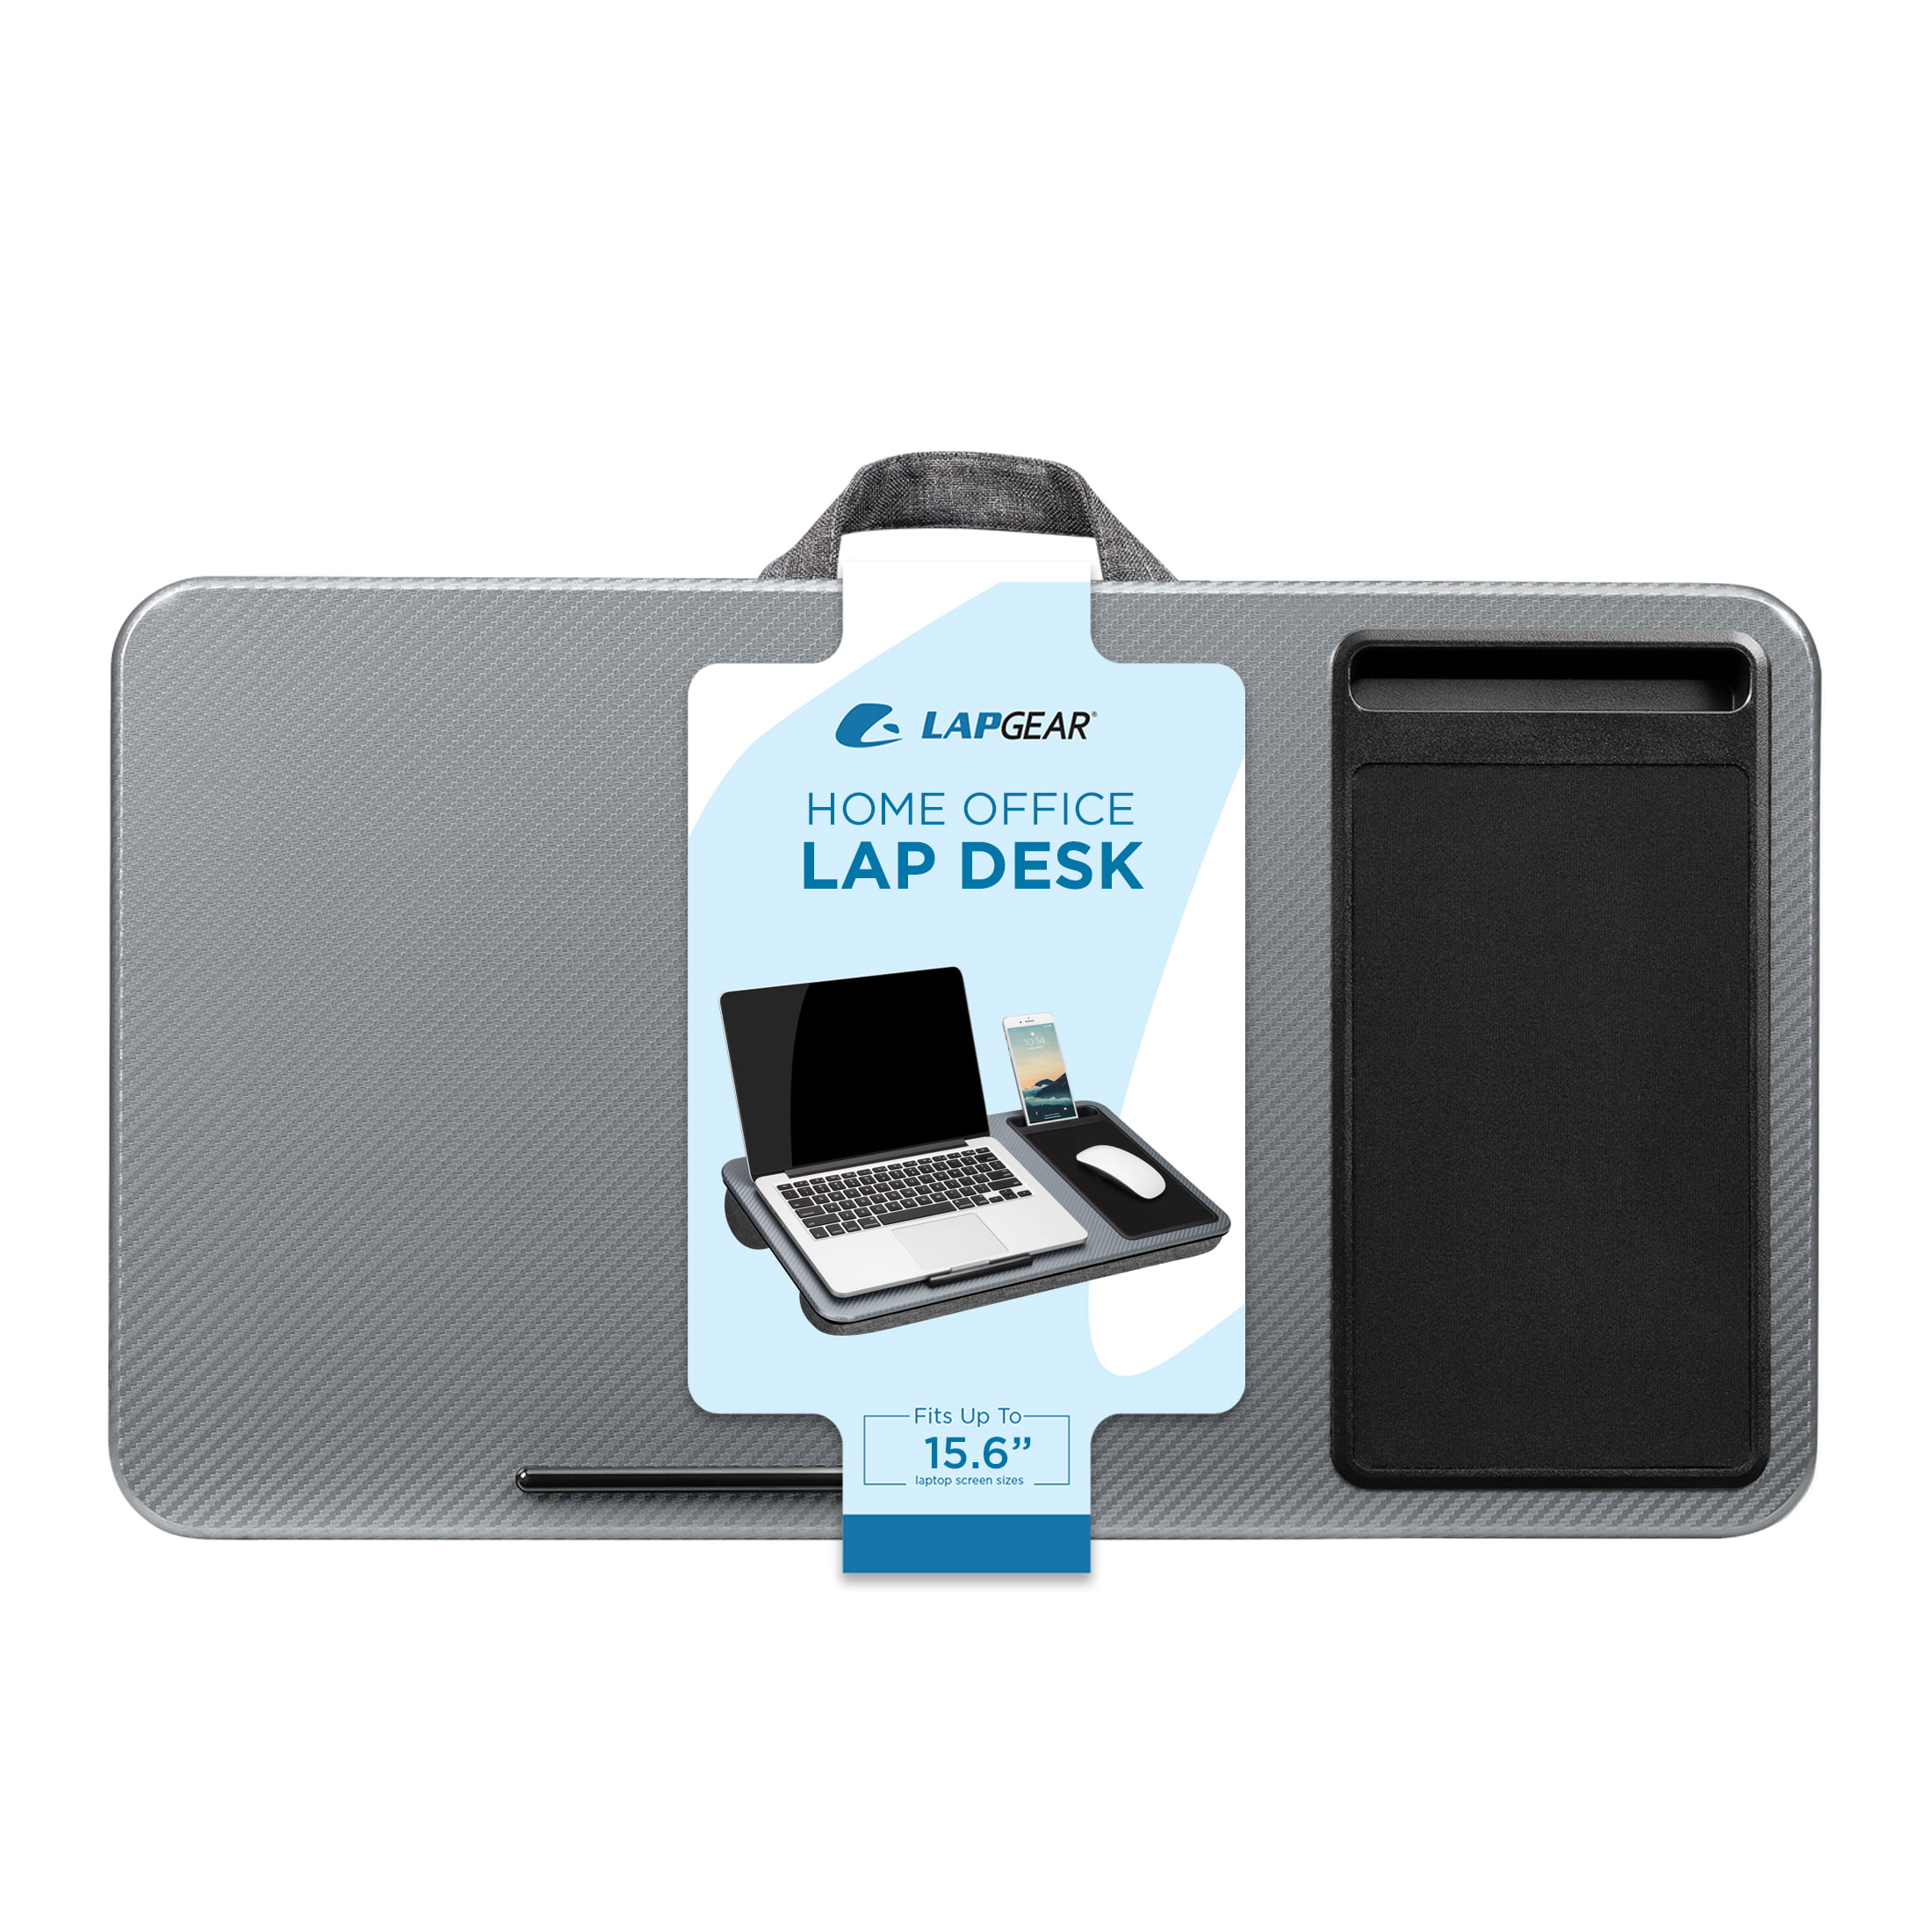 Geo LapGear MyStyle Lap Desk Fits up to 15.6 Laptop - Style #45315 